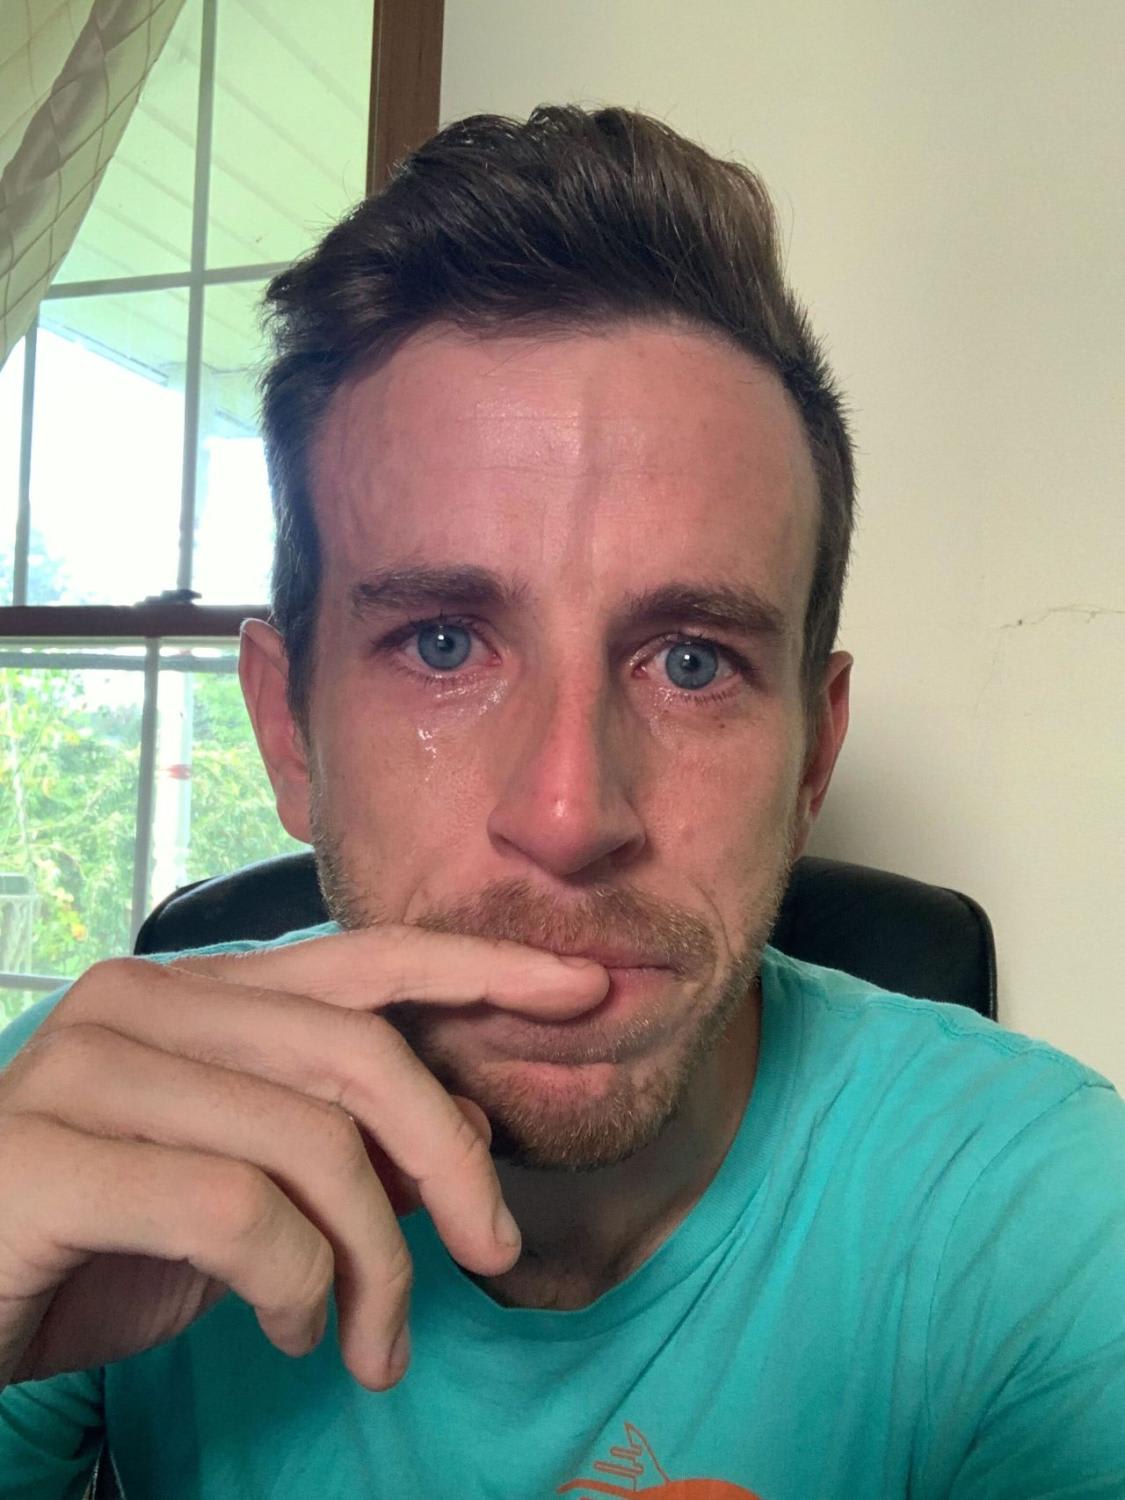 Mr Braden Wallake's photo of himself crying. Many LinkedIn users have called his post "cringeworthy", “self-indulgent” and “tone-deaf”.